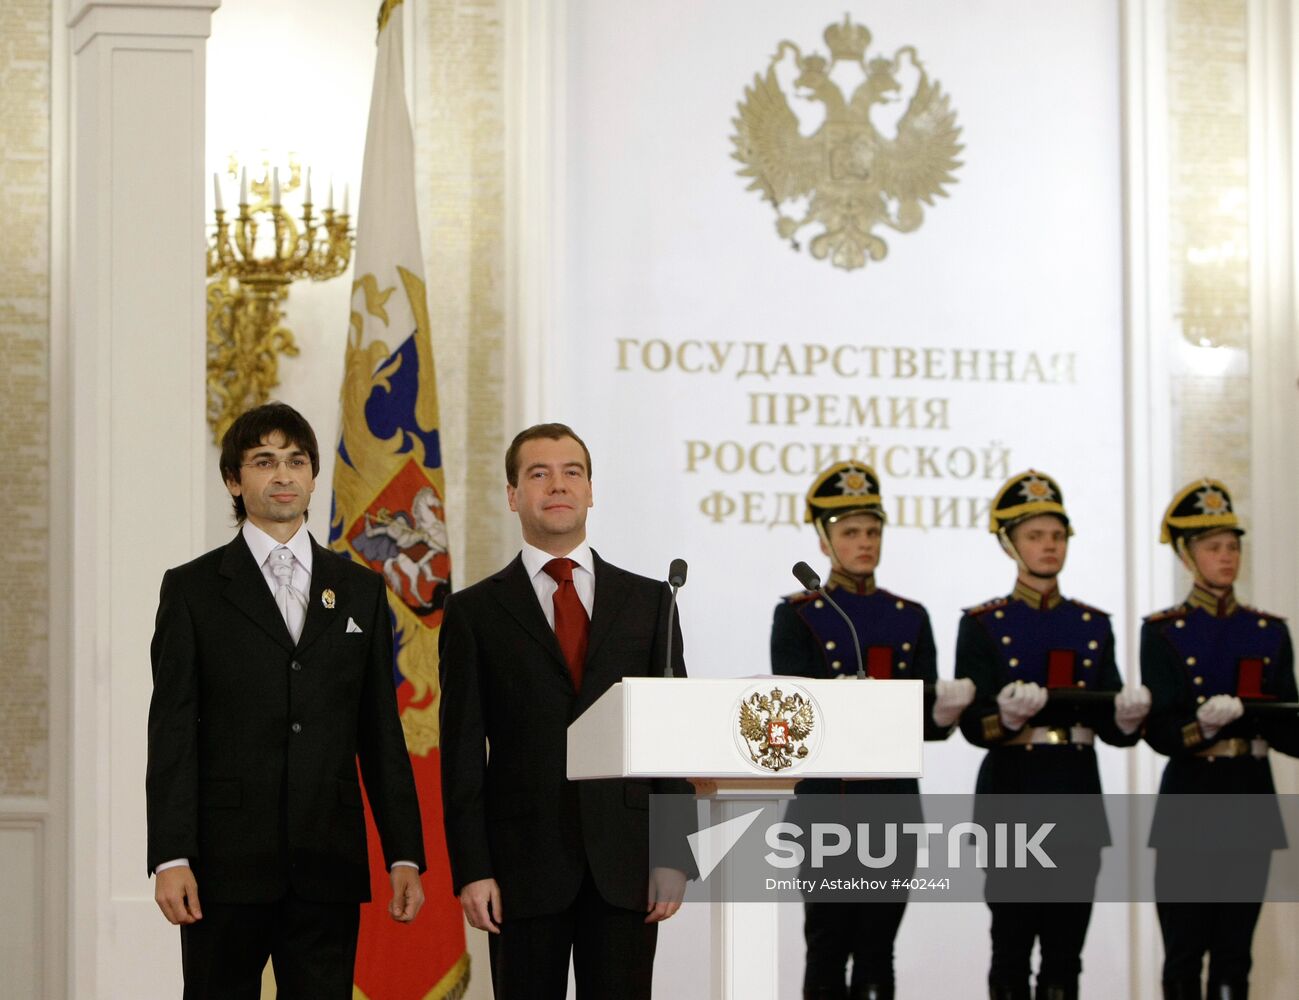 Dmitry Medvedev presents state awards 2008 at the Kremlin